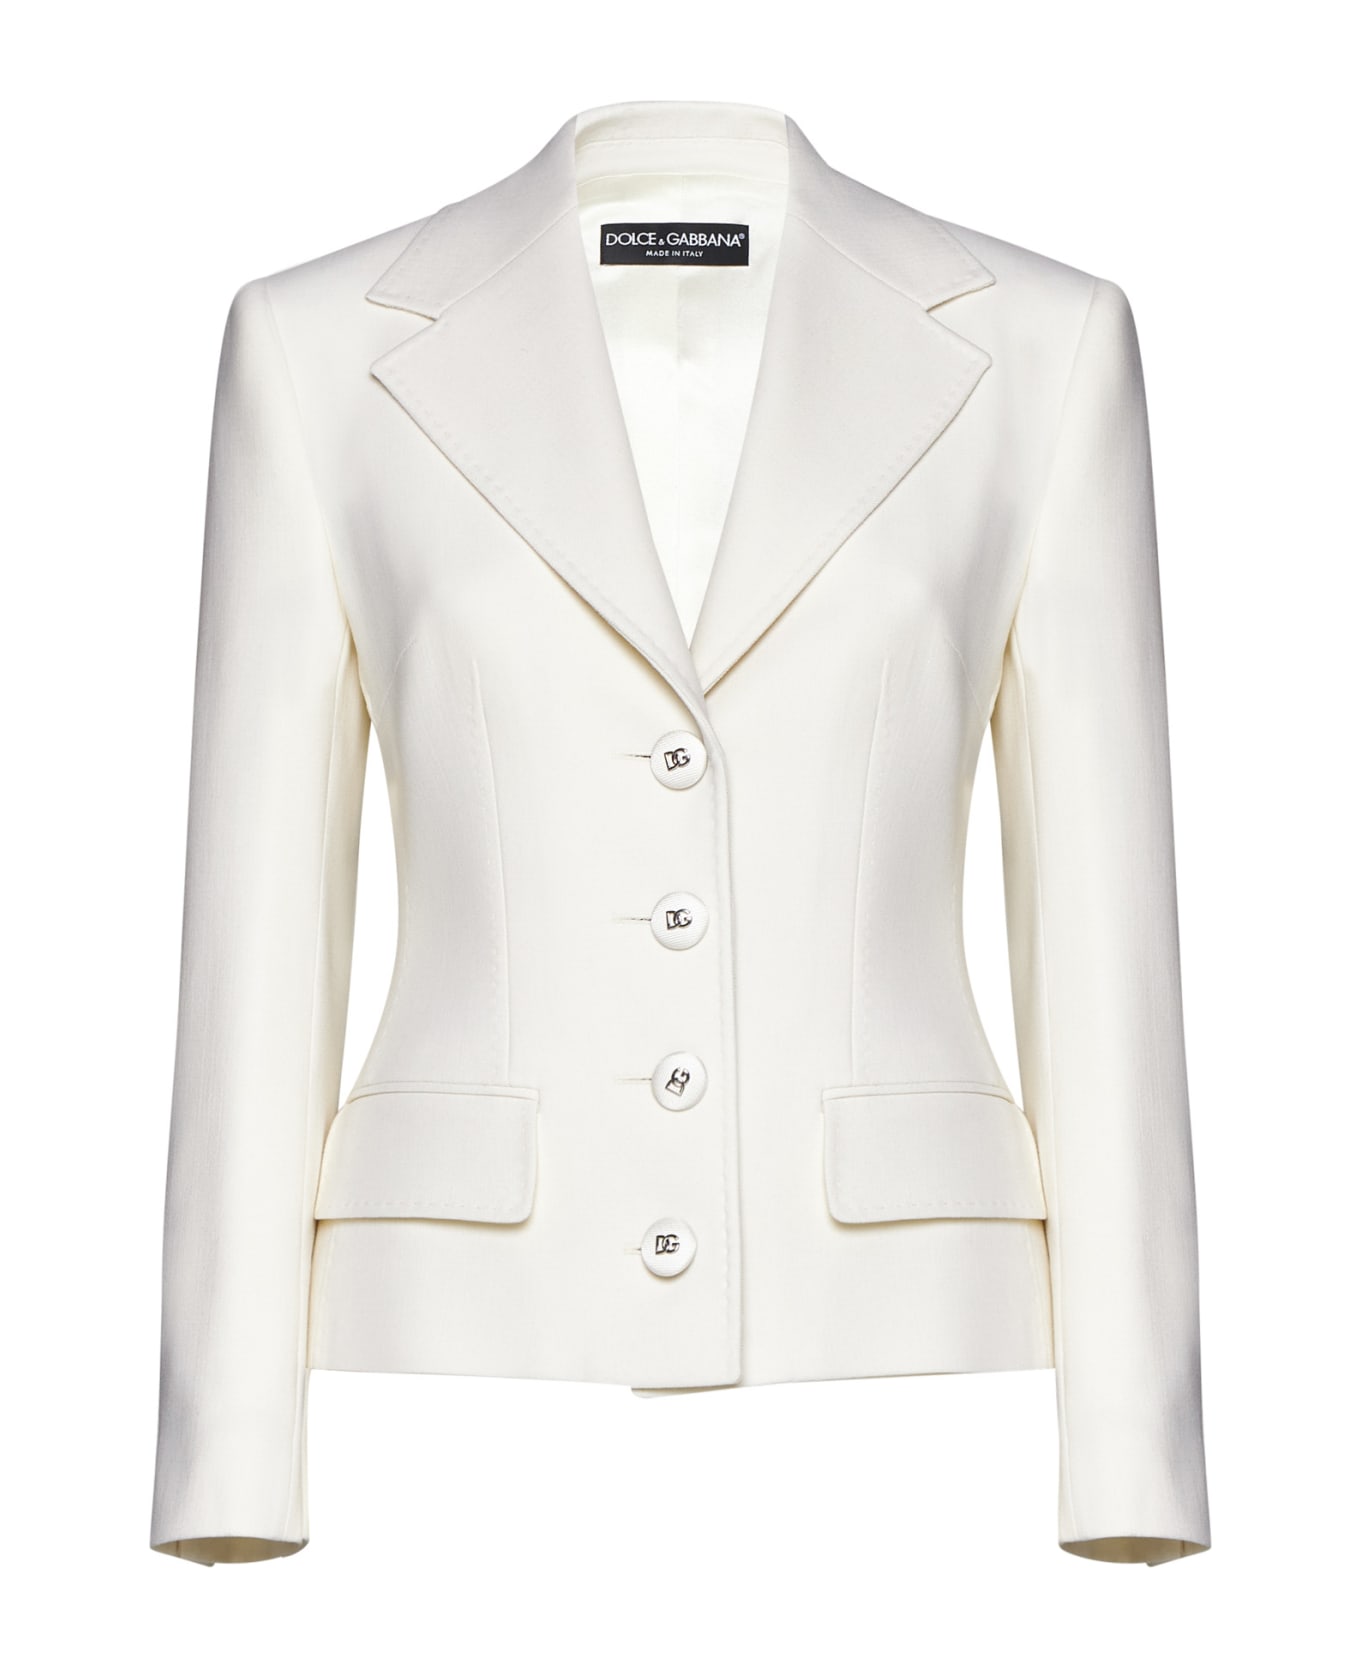 Dolce & Gabbana Single Breasted Button Jacket - Bianco naturale